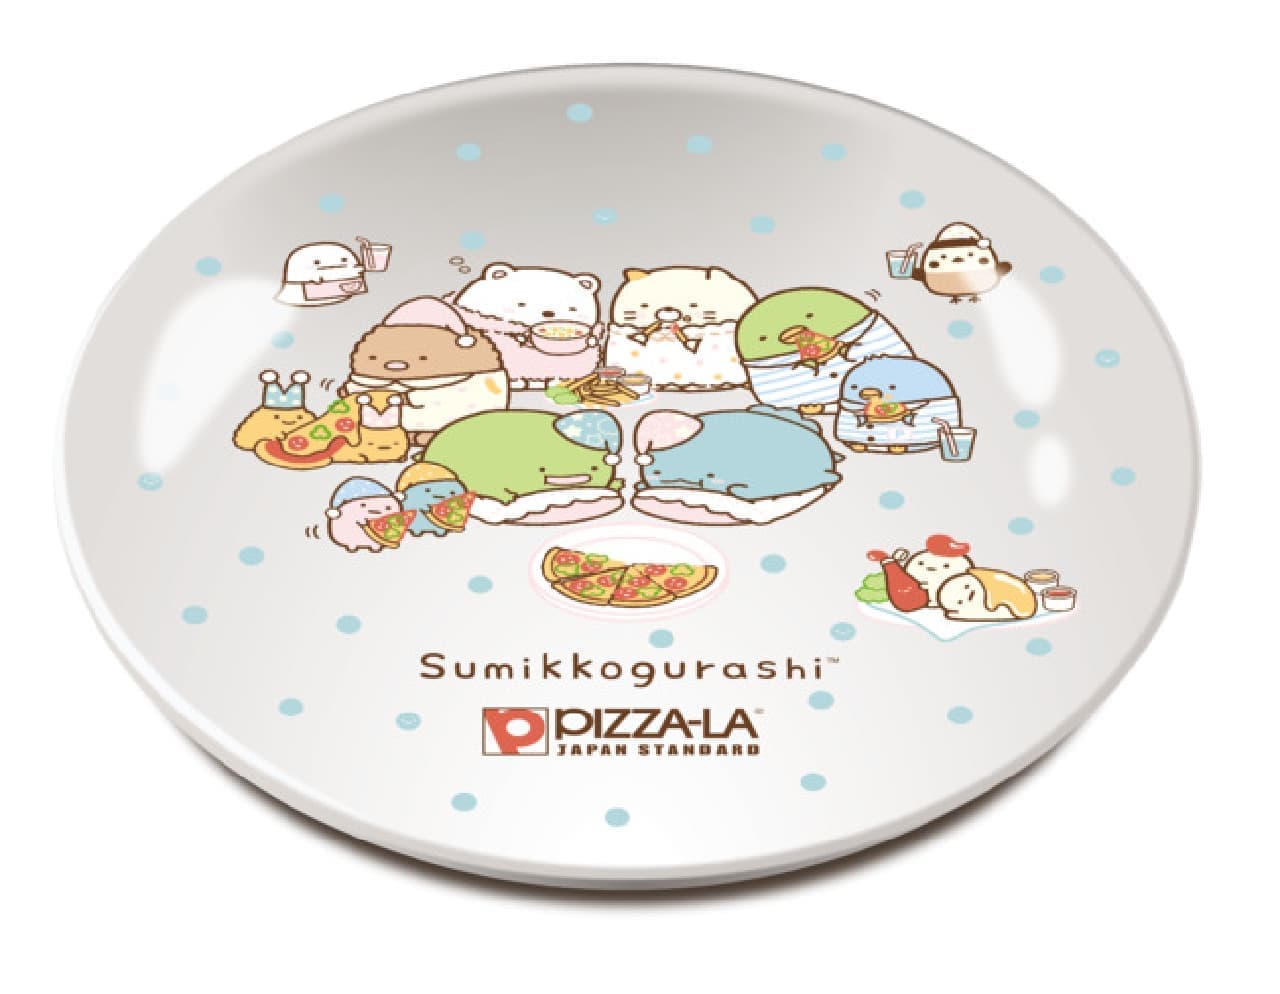 Pizza-La Sumikko Gurashi Special Pack